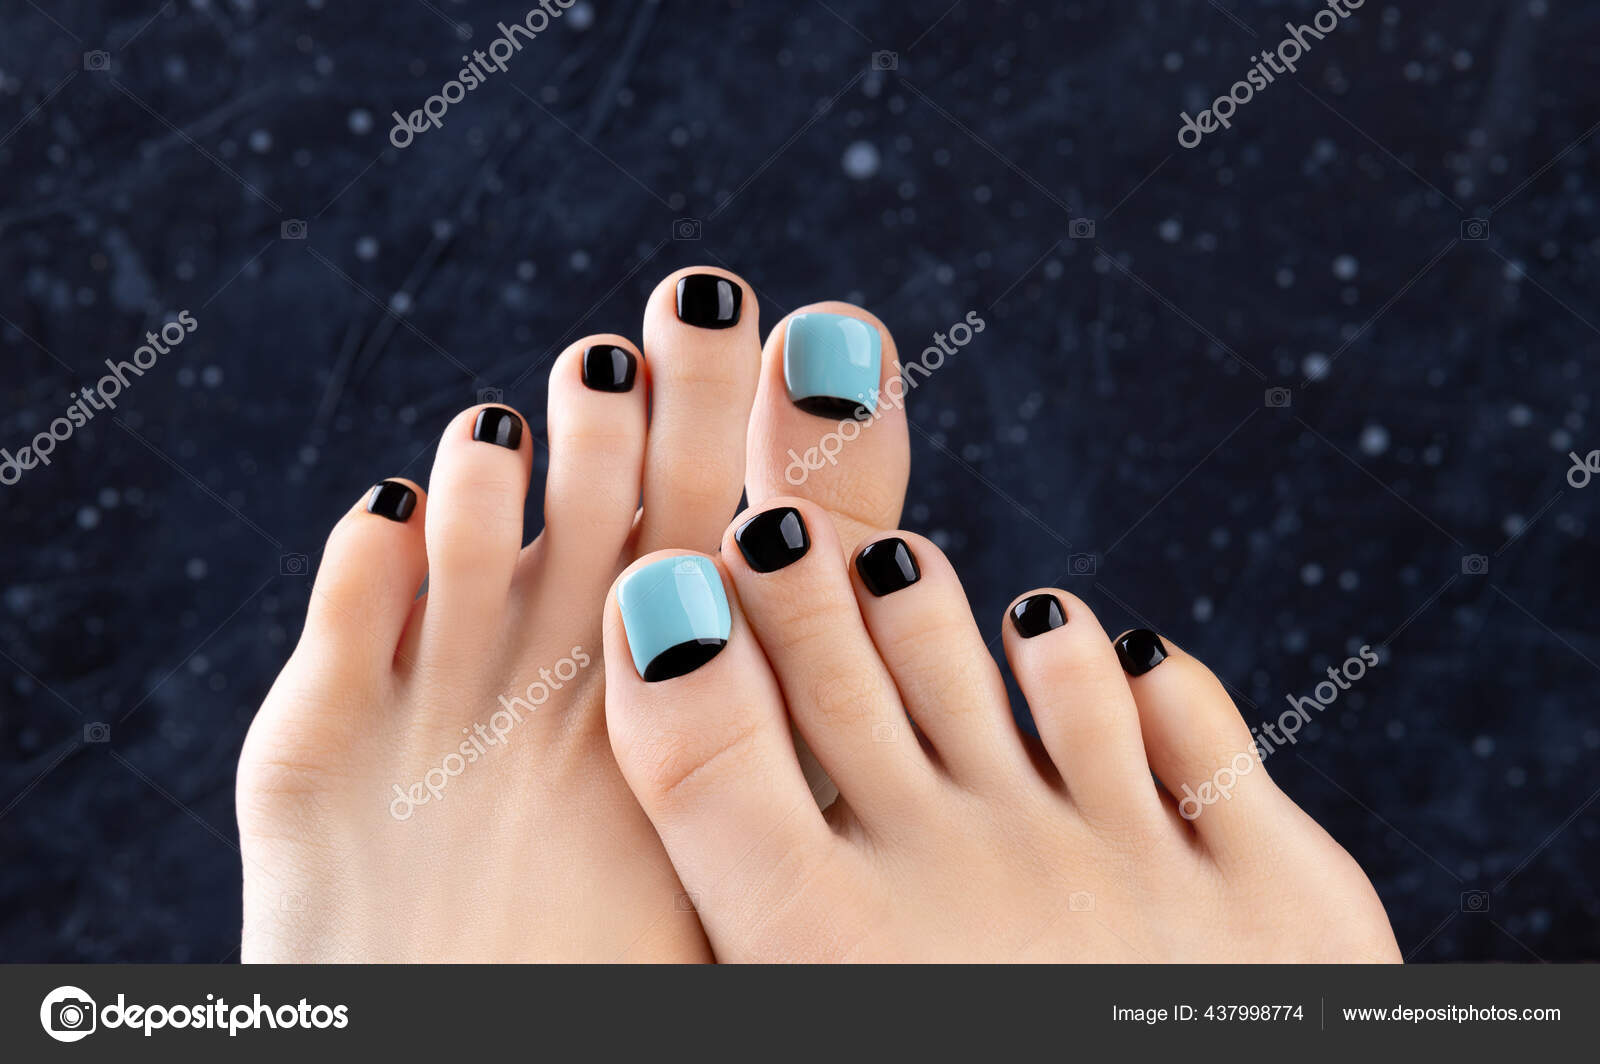 depositphotos 437998774 stock photo womans feet dark background beautiful